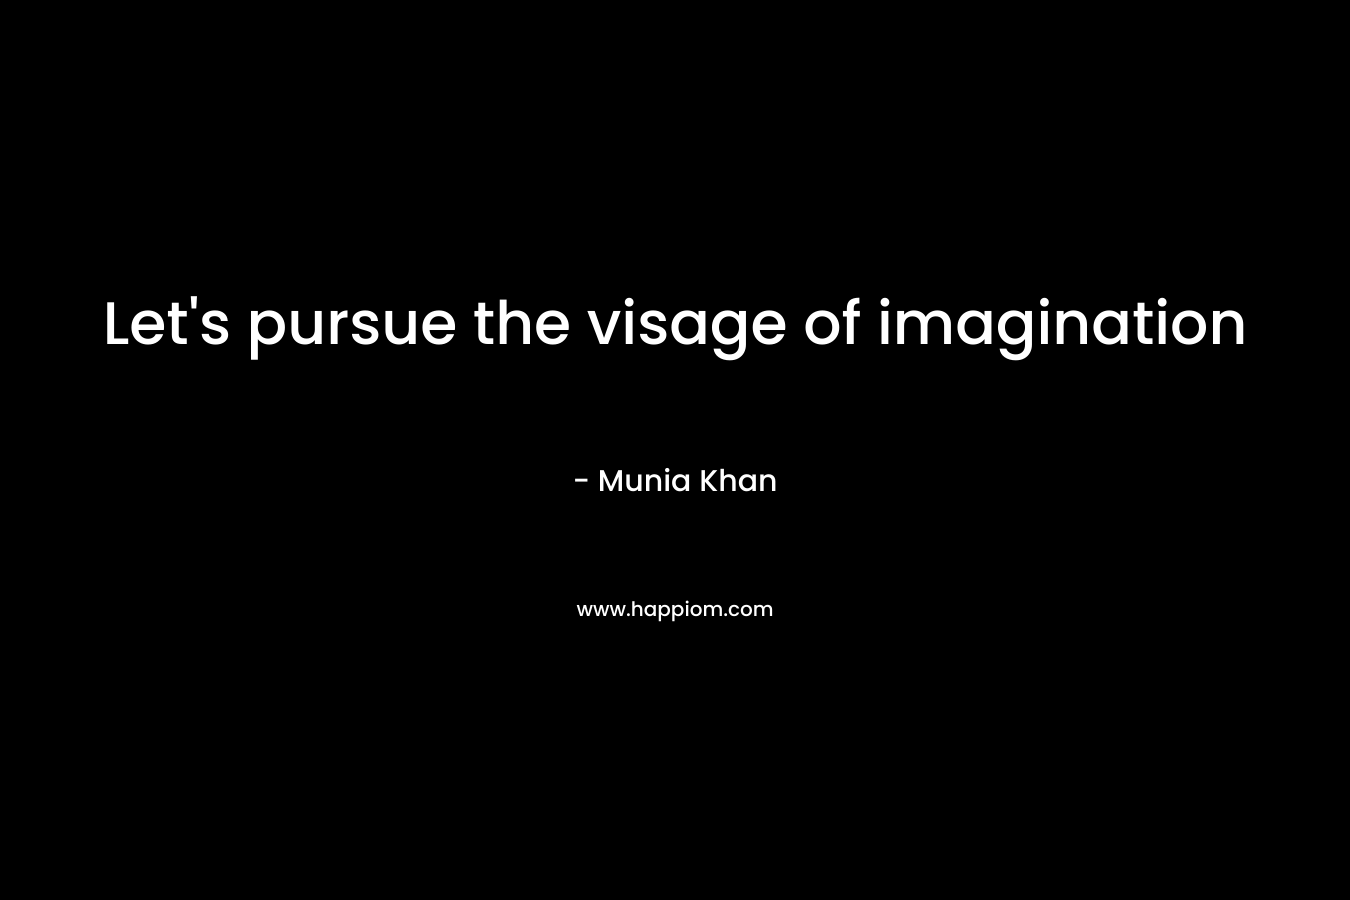 Let's pursue the visage of imagination